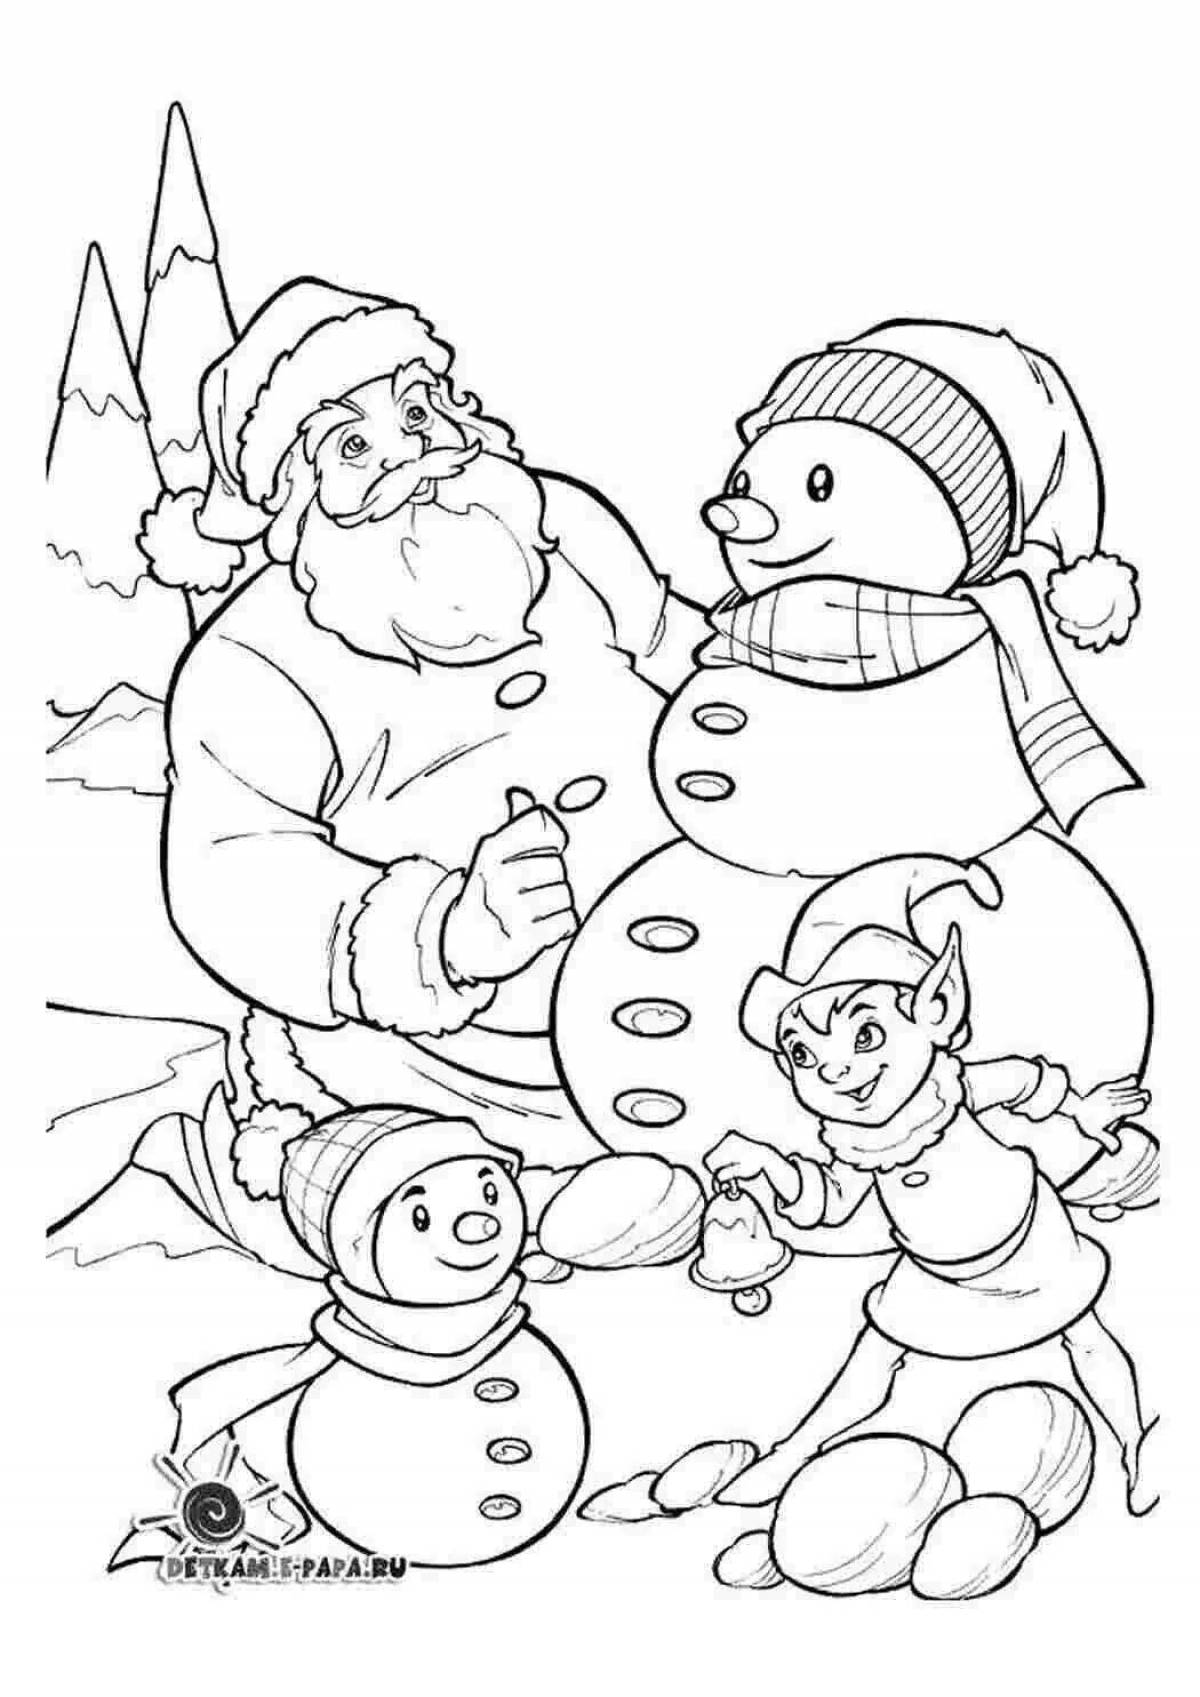 Tempting snowman coloring book